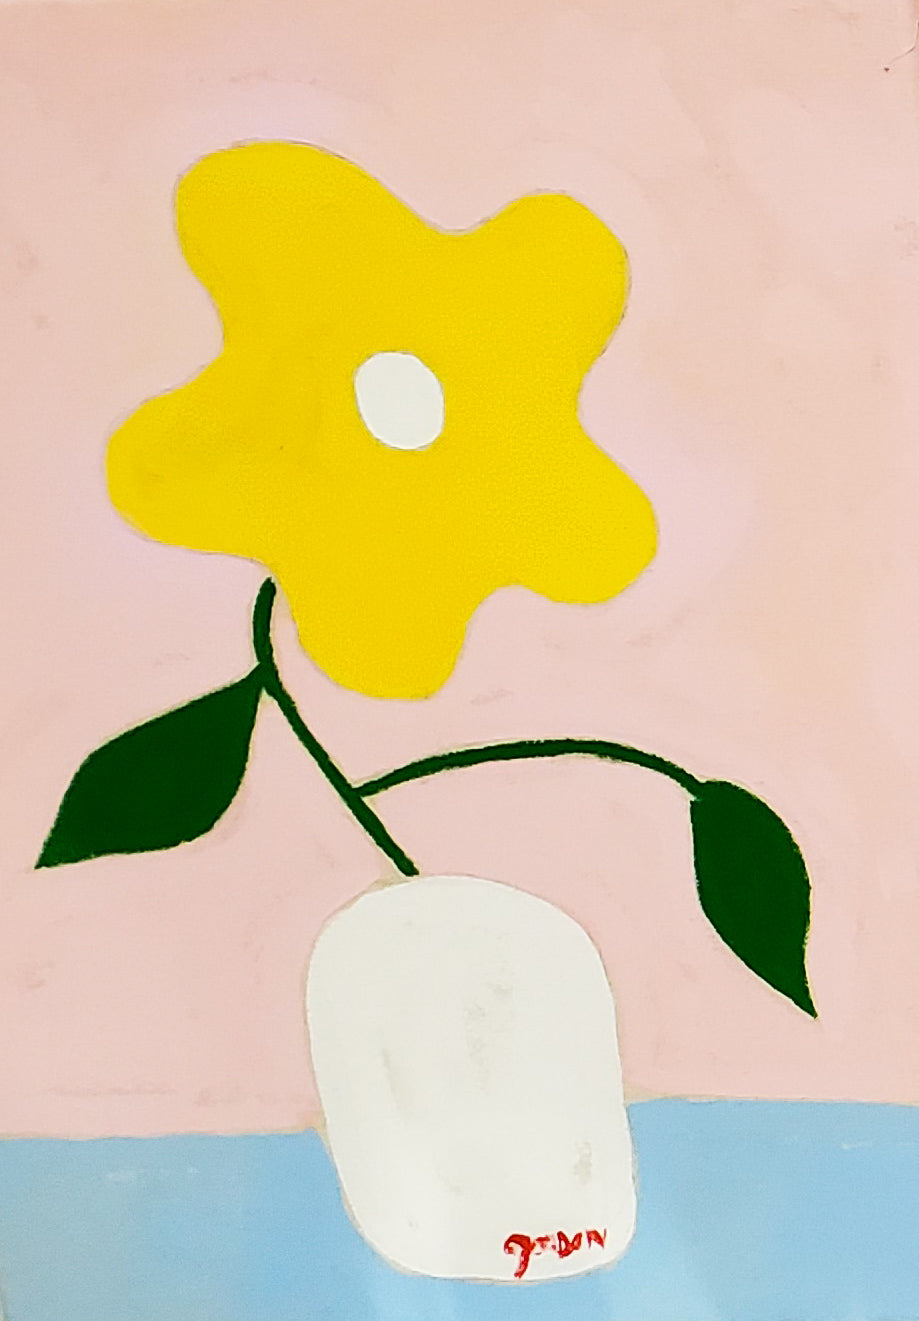 Gordan Douglas Ball, "Yellow Flower"